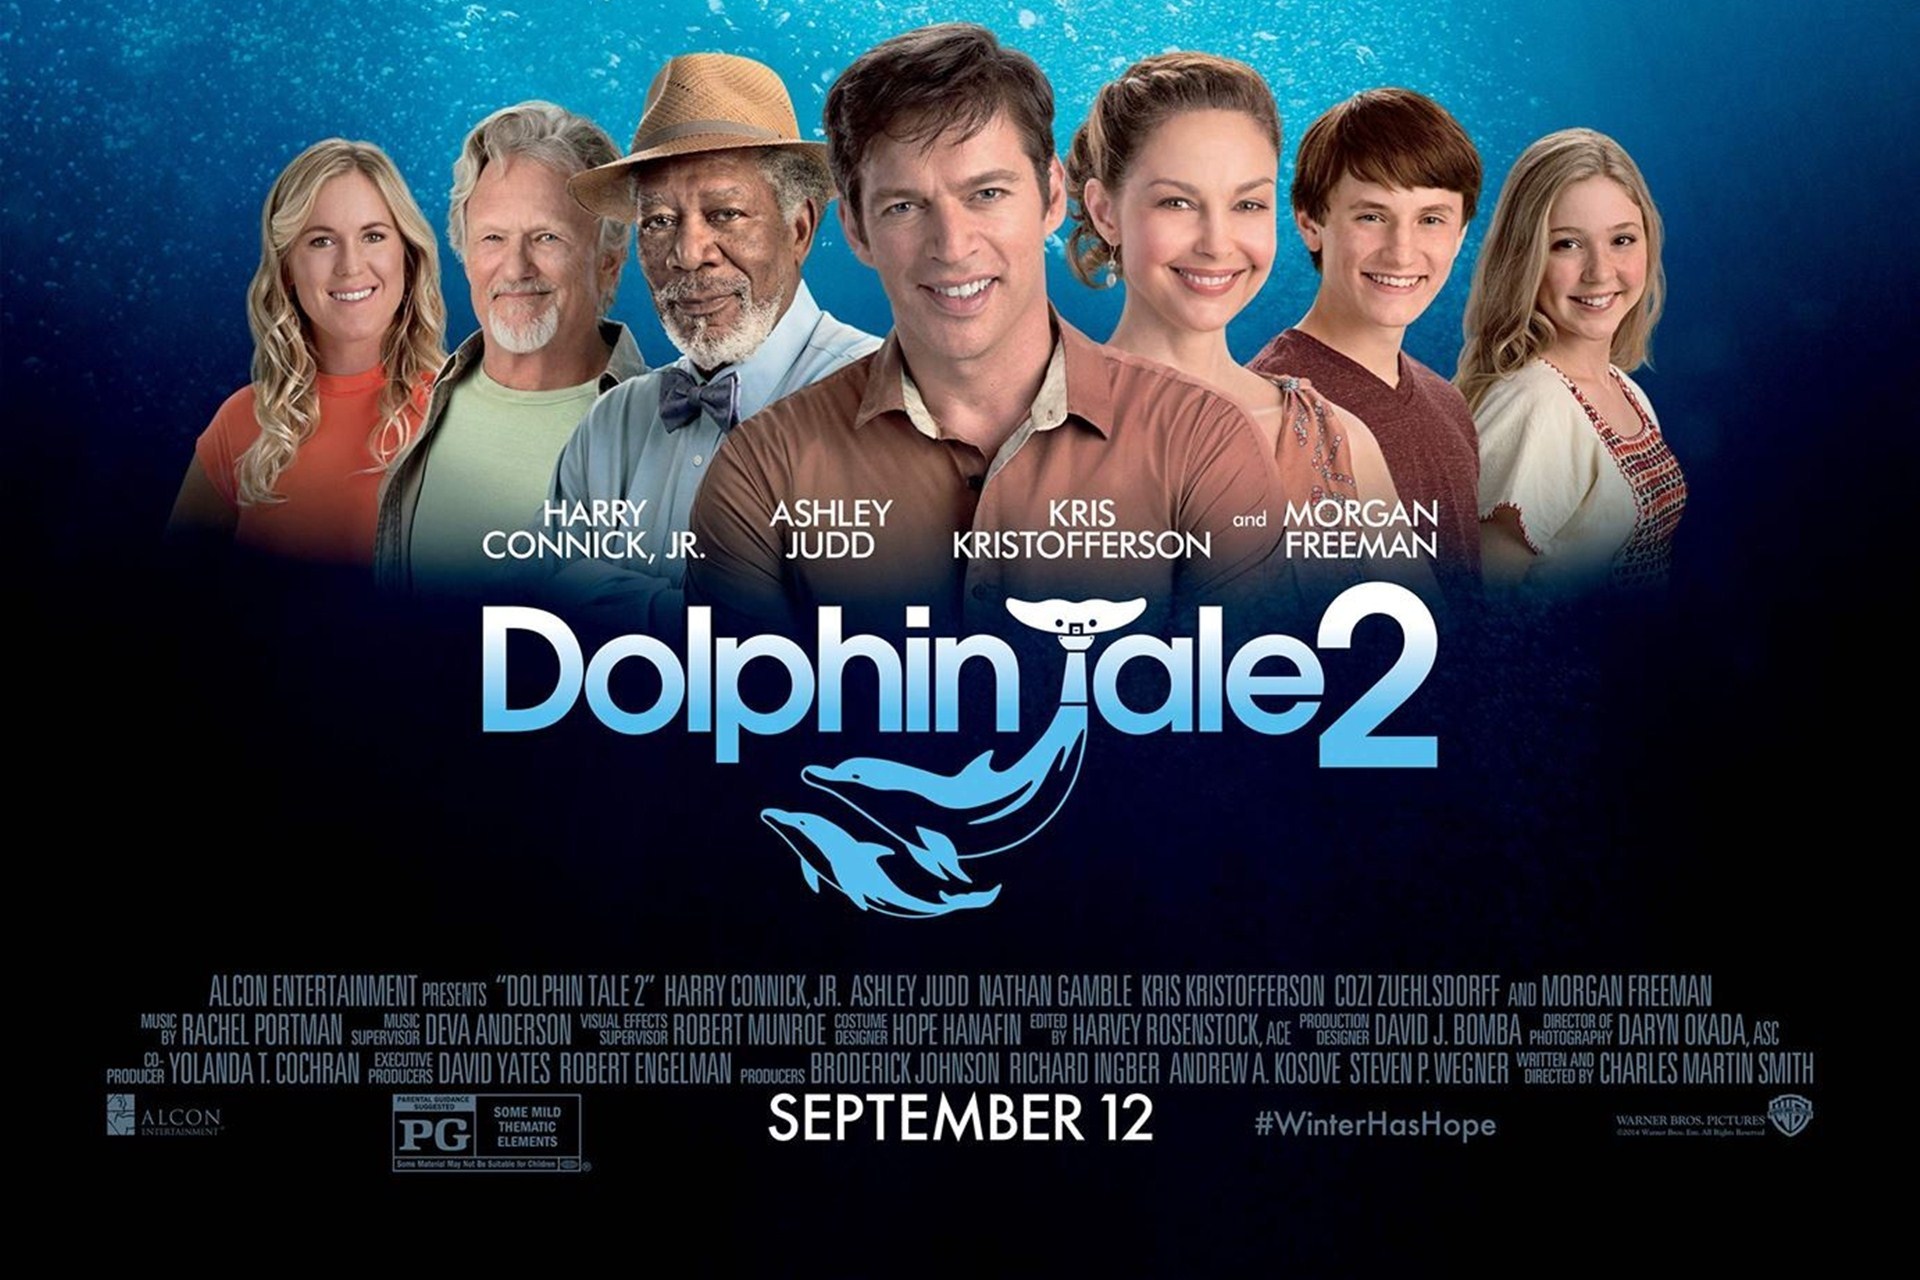 Dolphin Tale 2 wallpaper, Movie, HQ Dolphin Tale 2 pictureK Wallpaper 2019